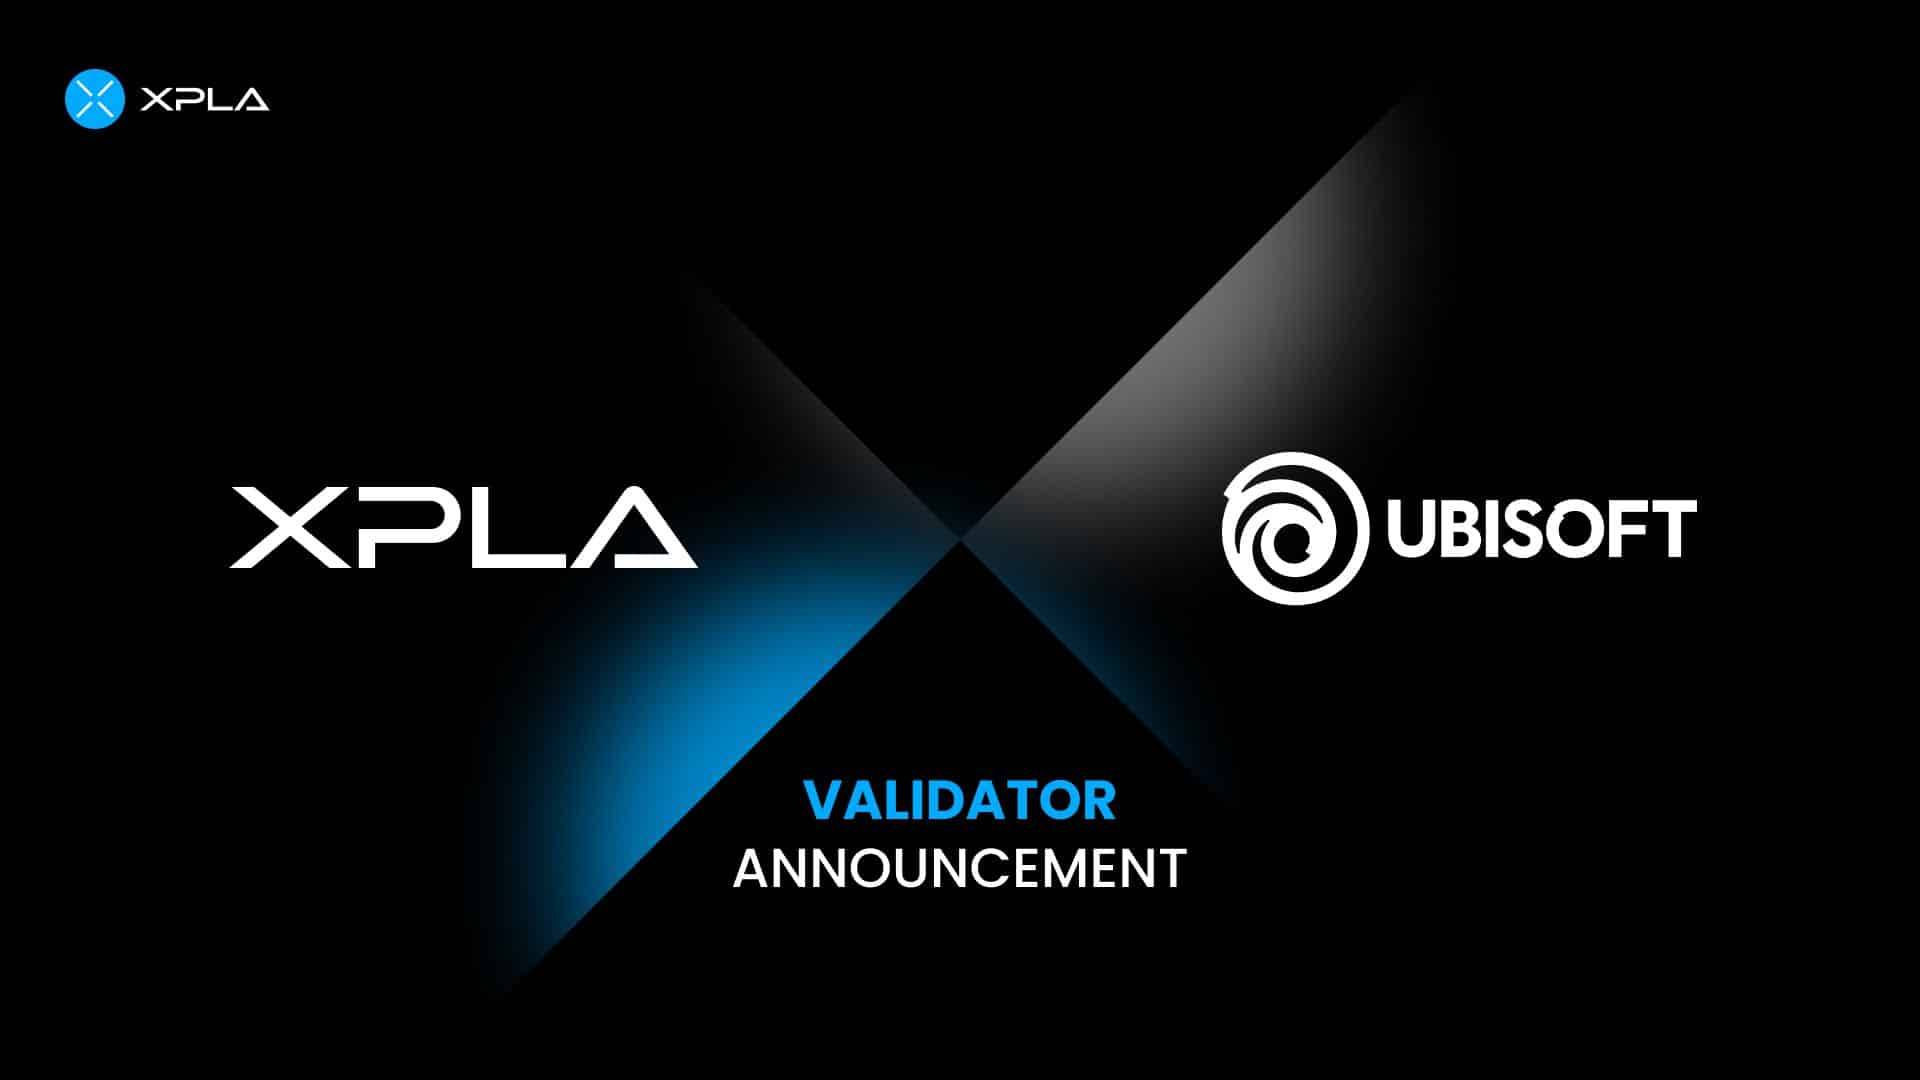 Ubisoft Becomes Validator for XPLA Blockchain, Boosting Web3 Gaming Ecosystem